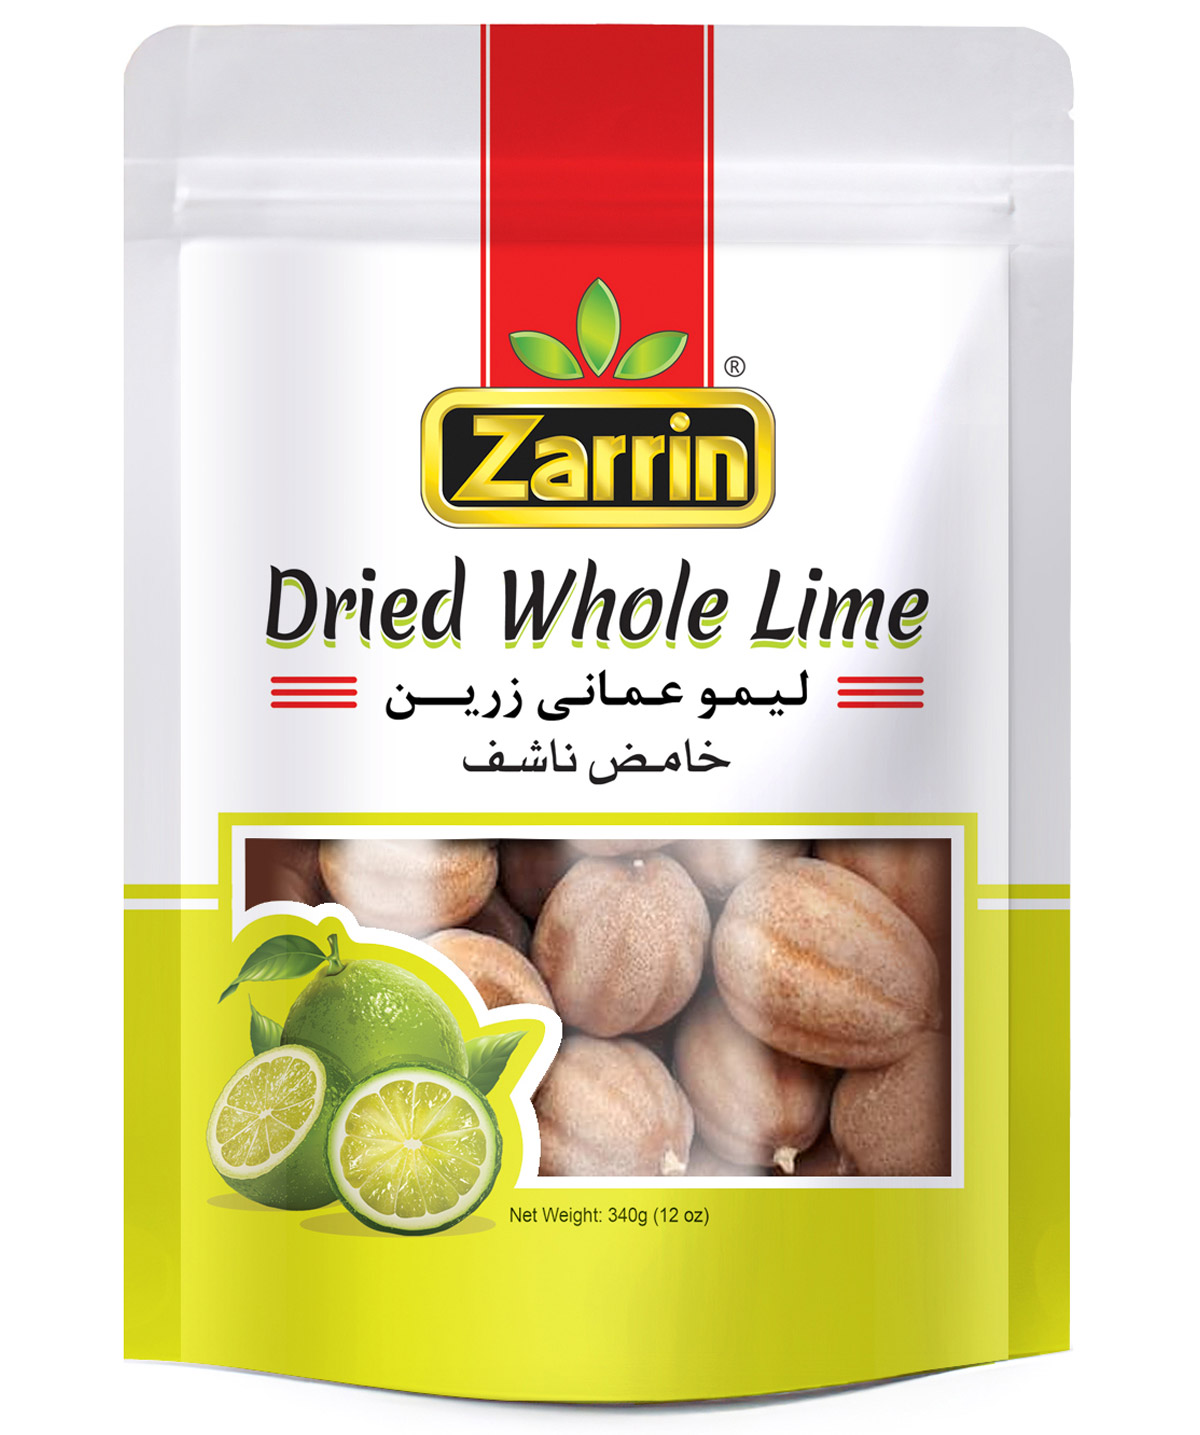 Zarrin Dried Whole Lime